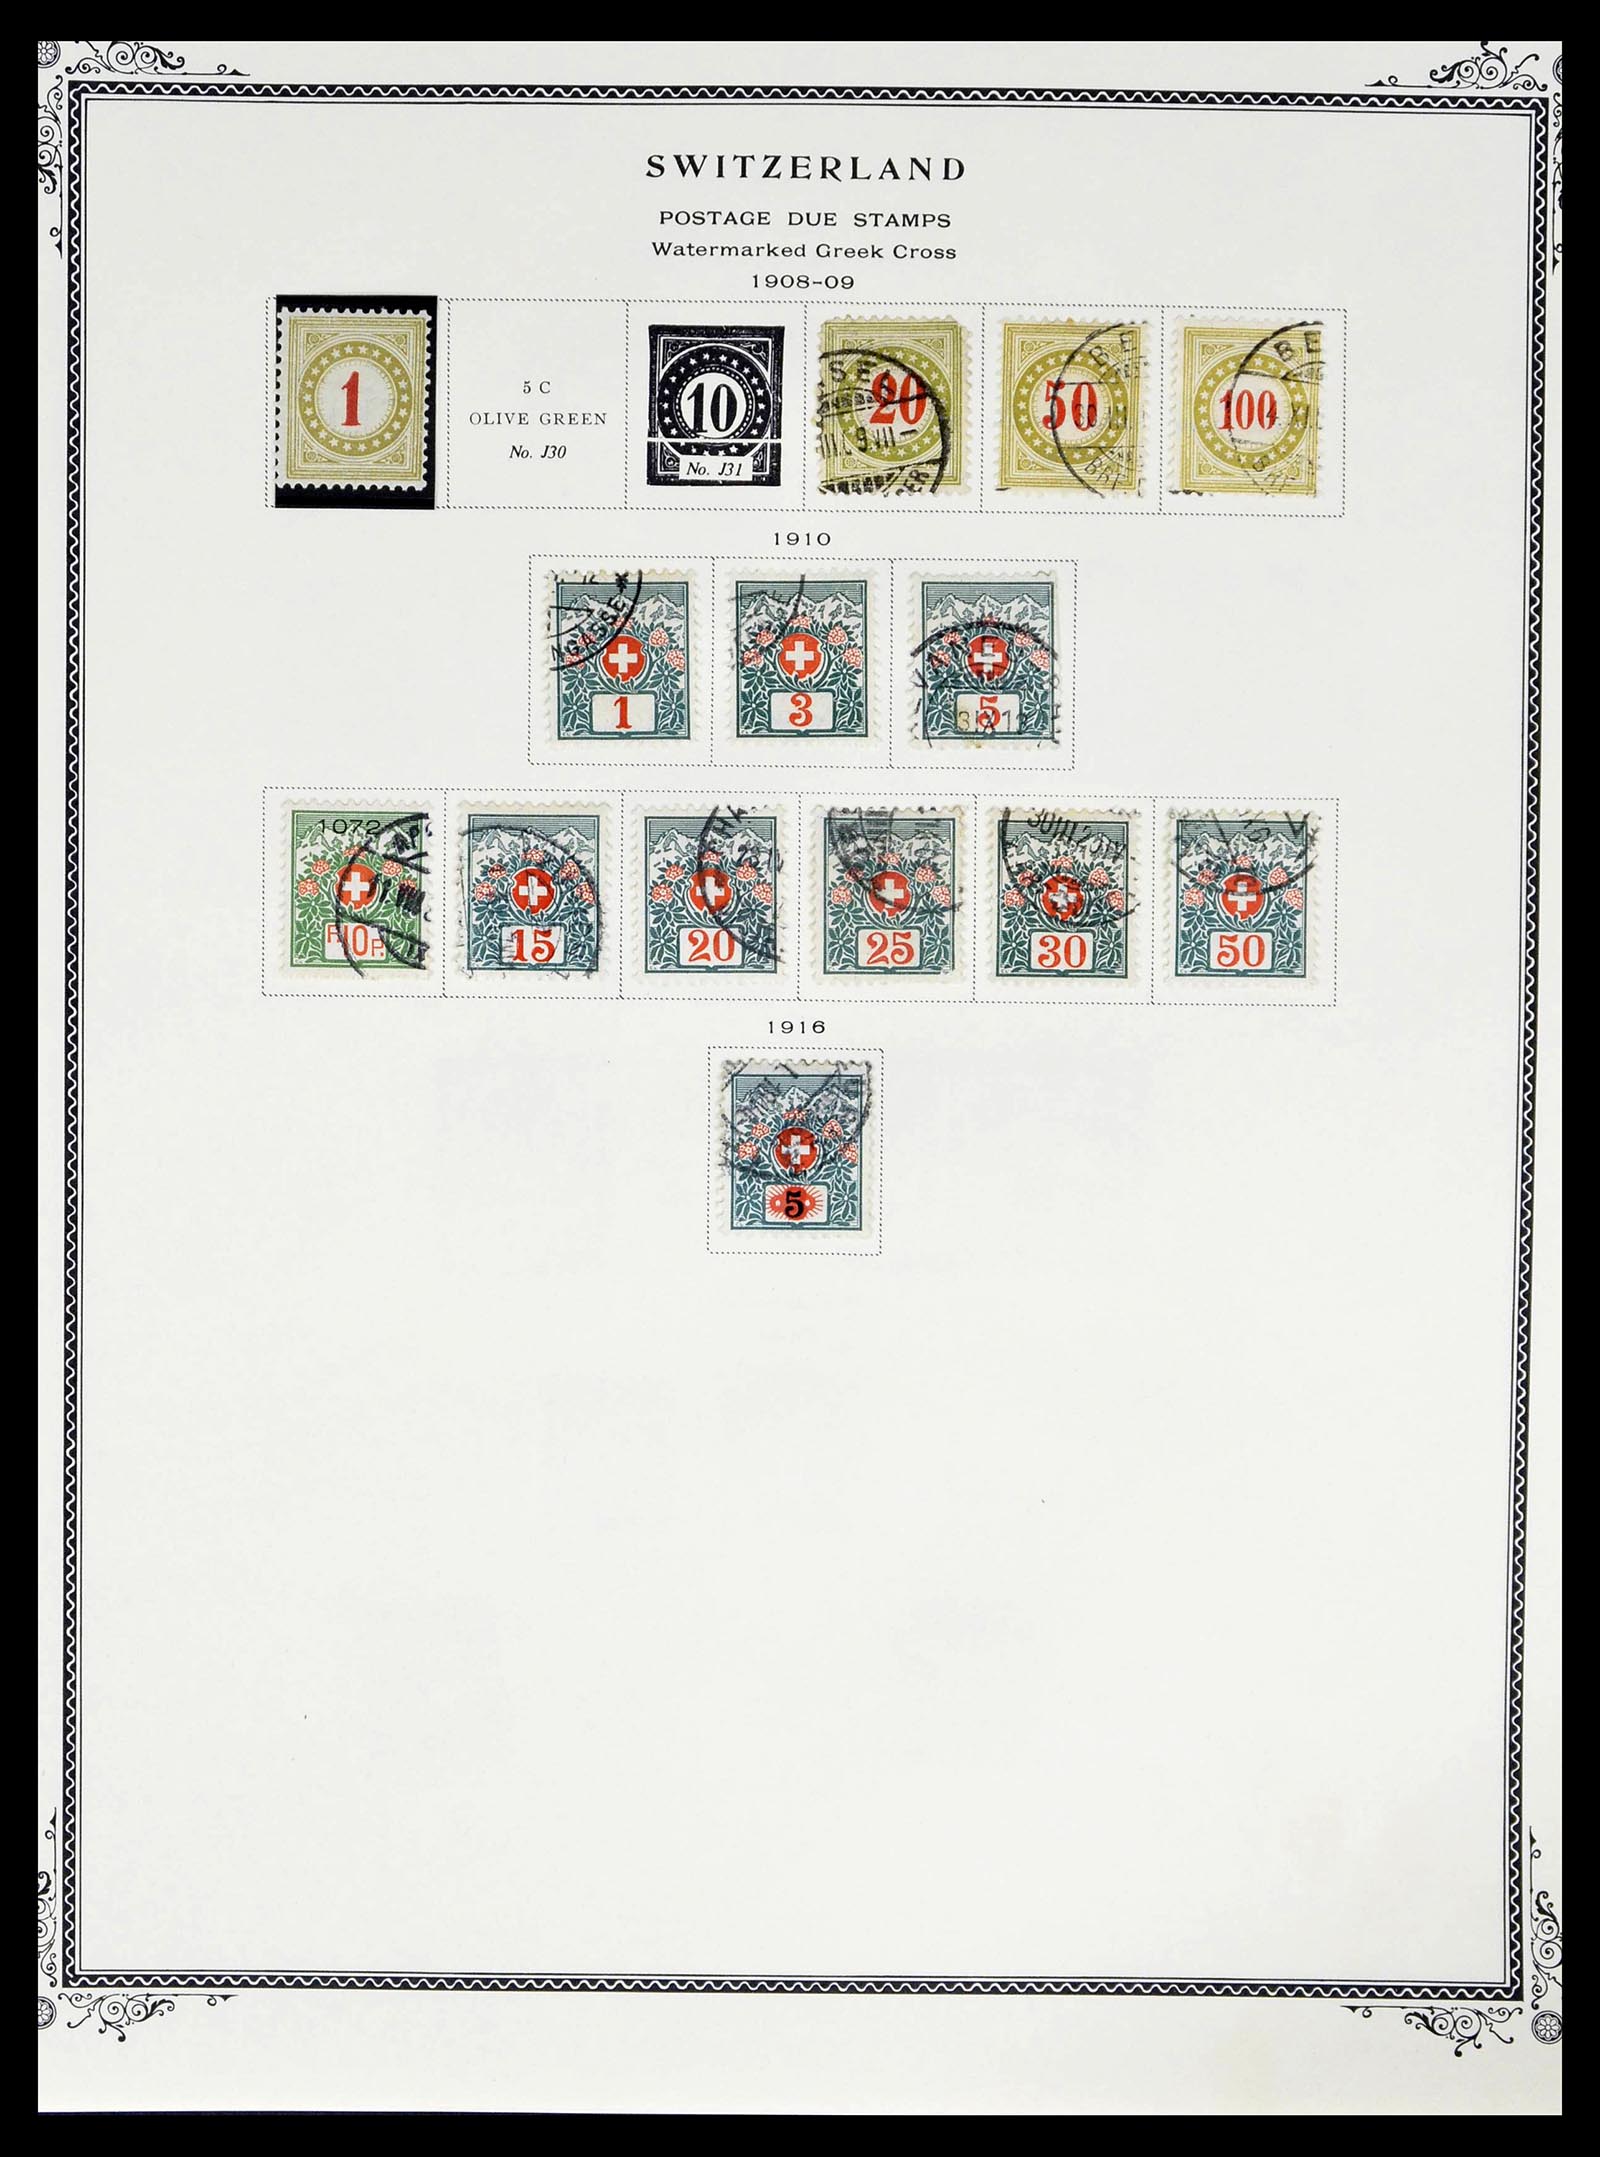 39178 0227 - Stamp collection 39178 Switzerland 1850-1989.